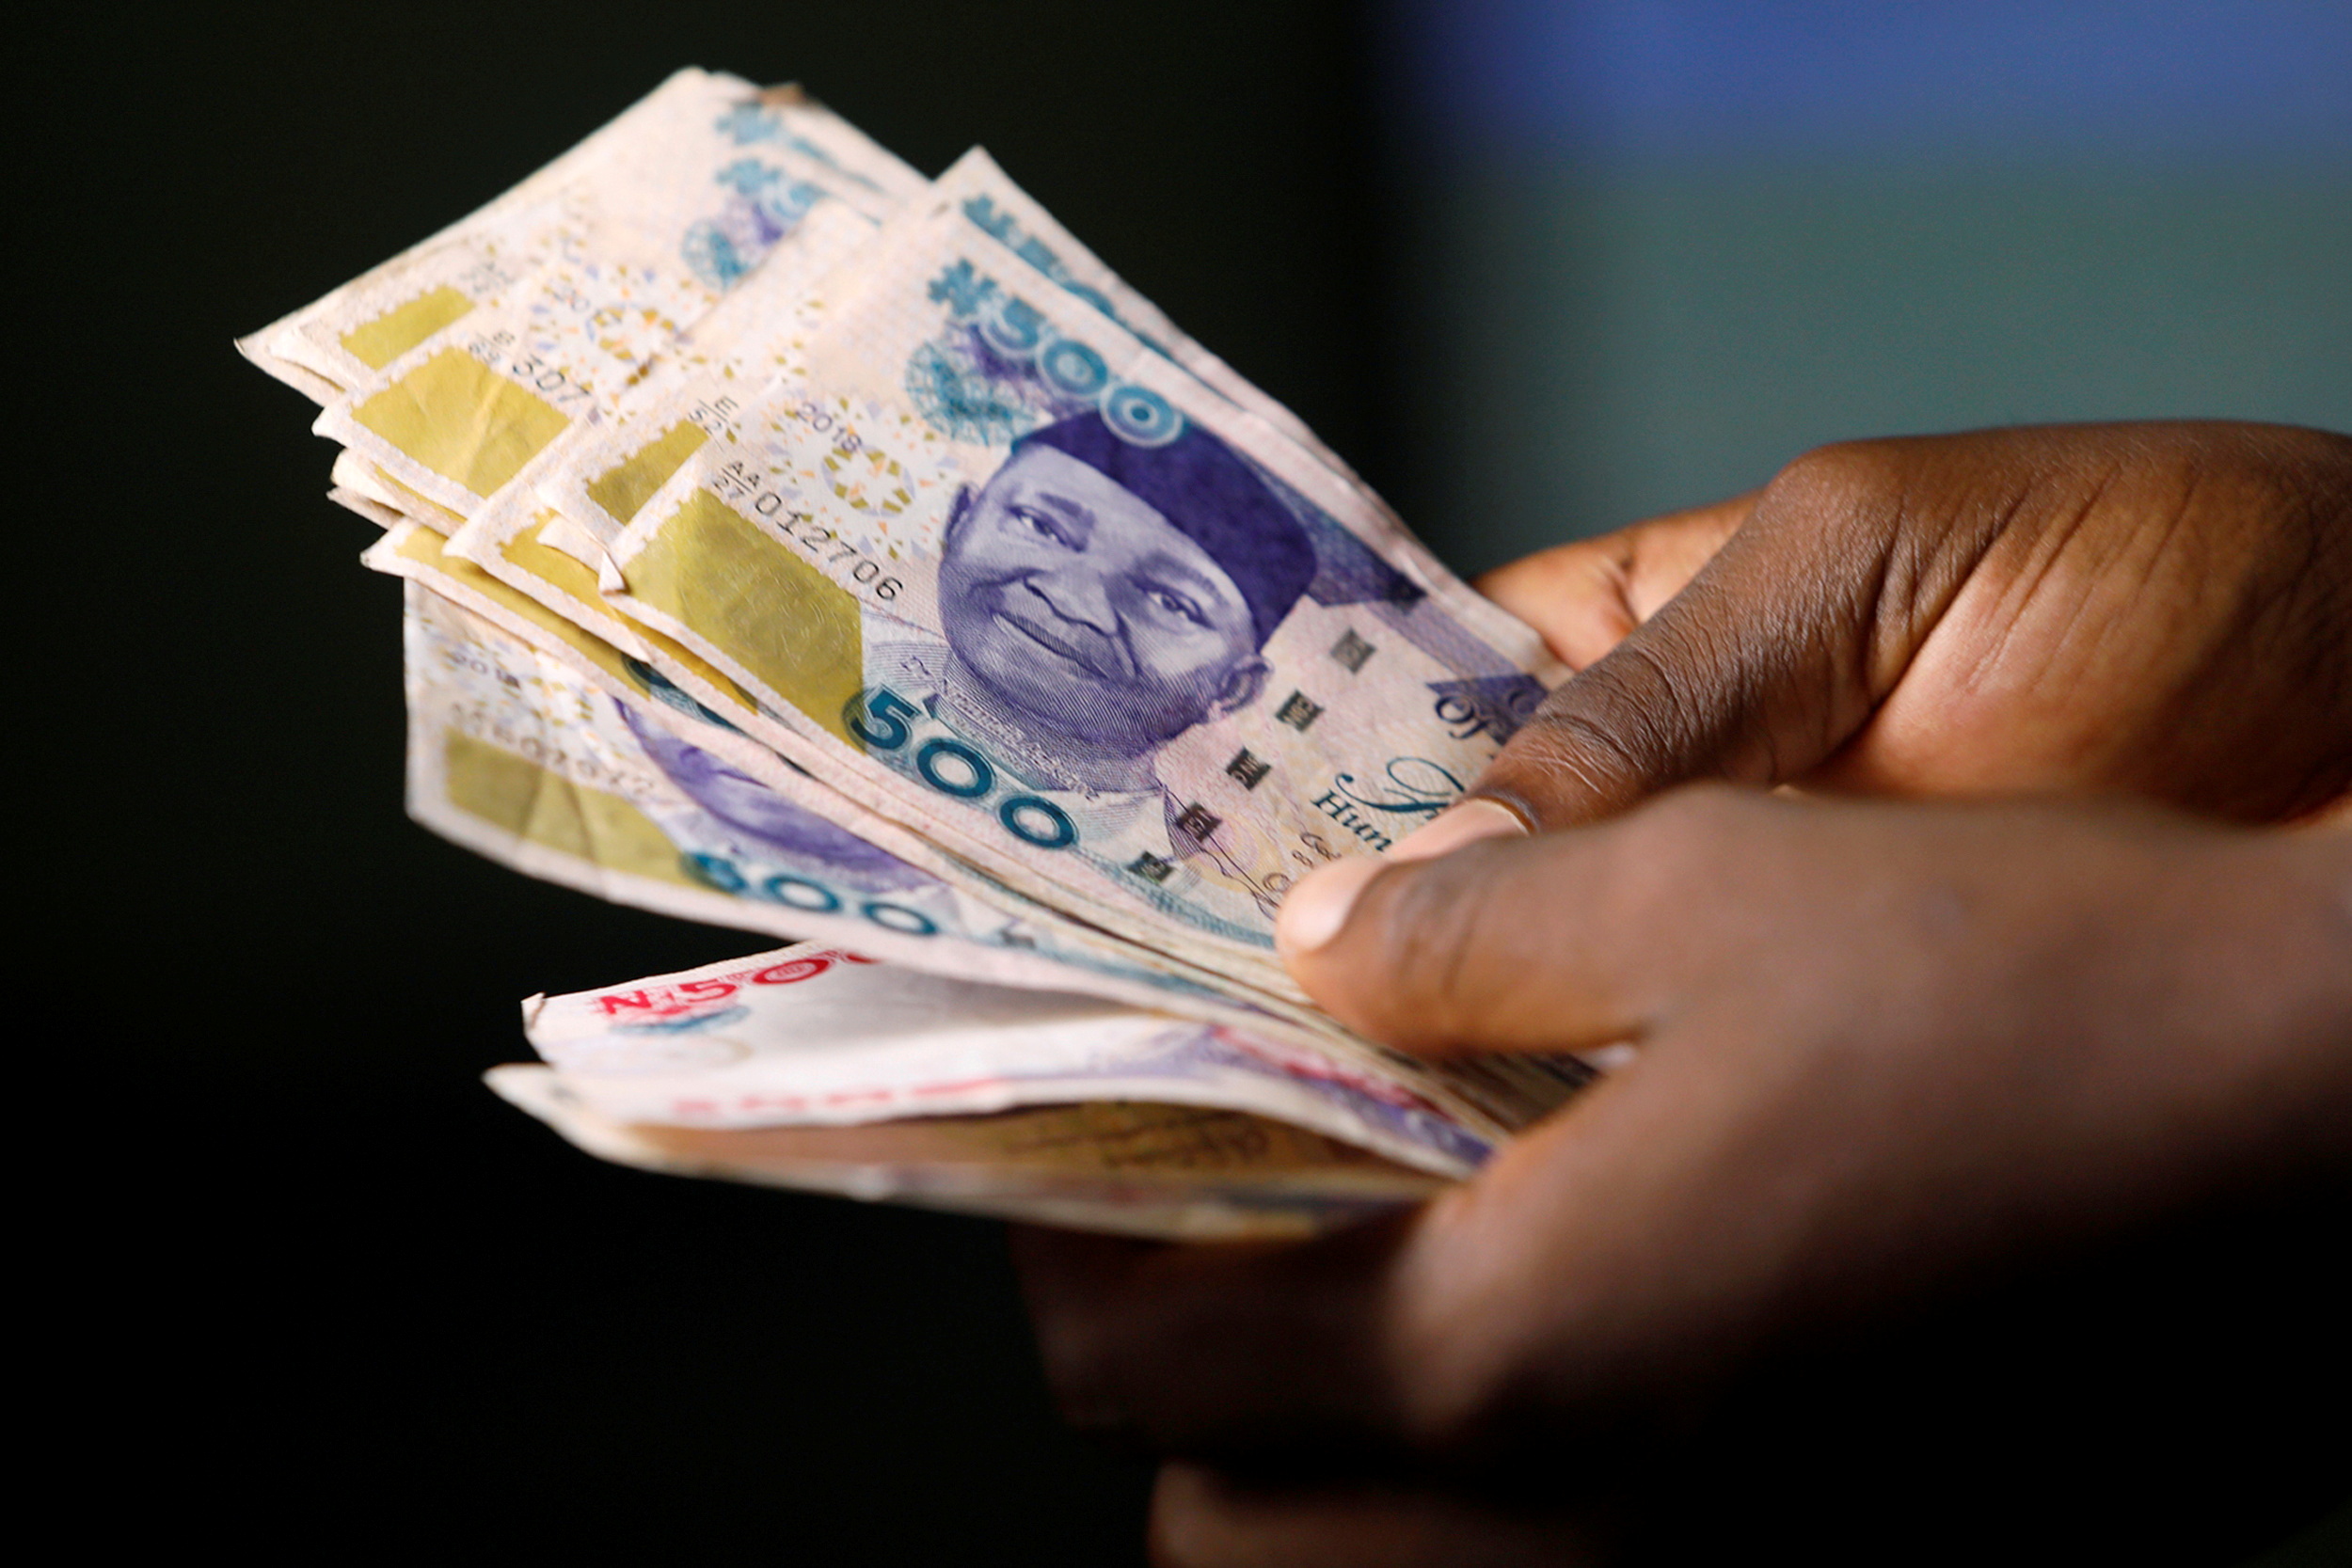 Over N16,000 Loan, Zuma Cash Sends Defamatory Message About Customer Before Payment Deadline